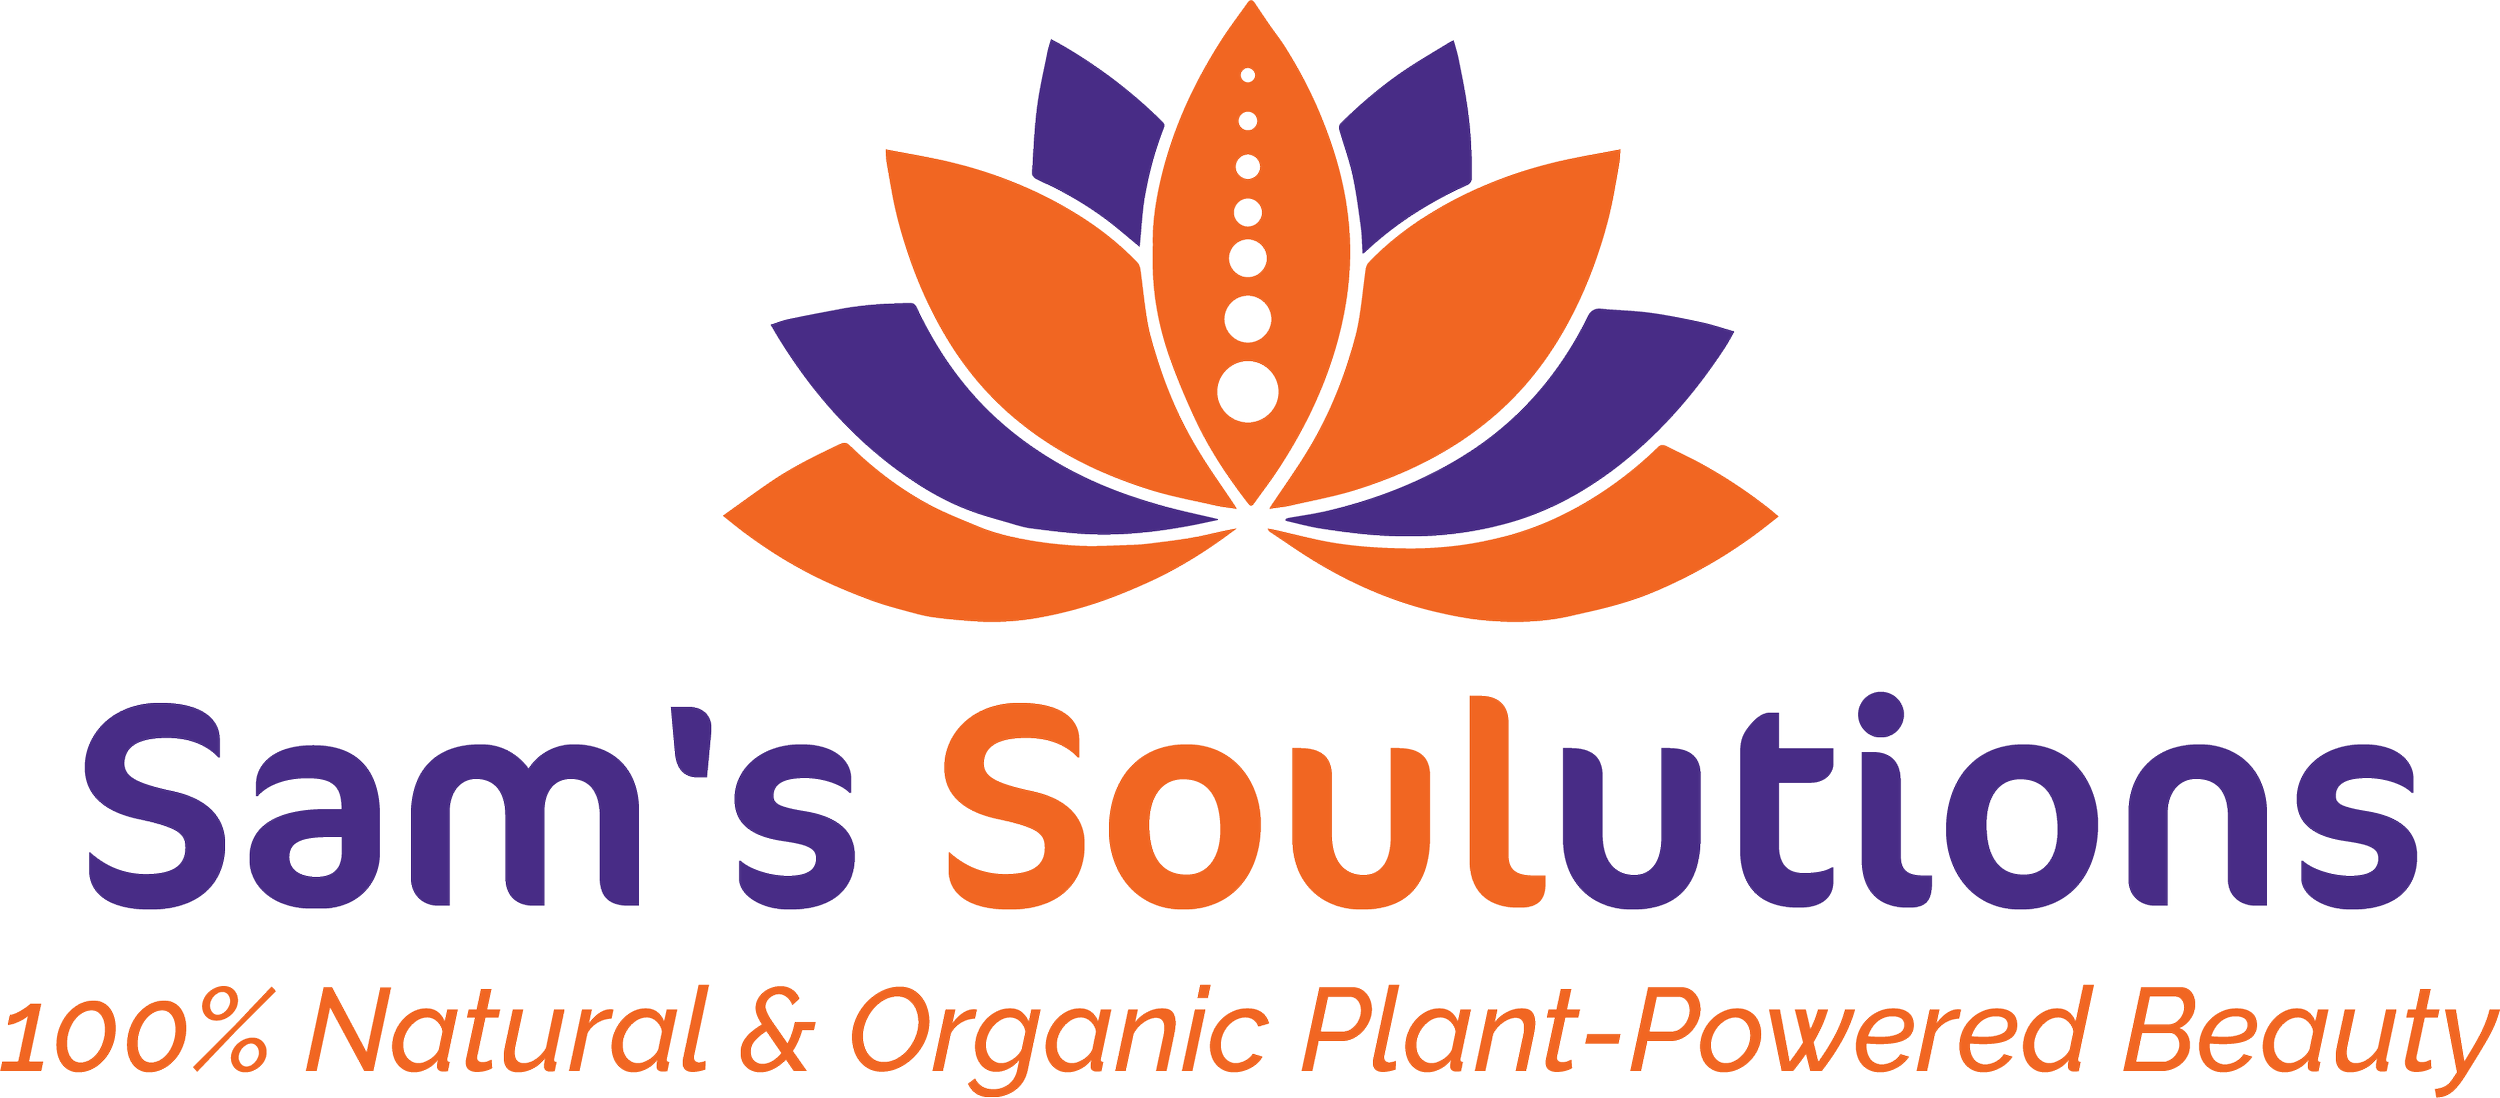 Sams_Soulutions logo RGB with slogan (1).png